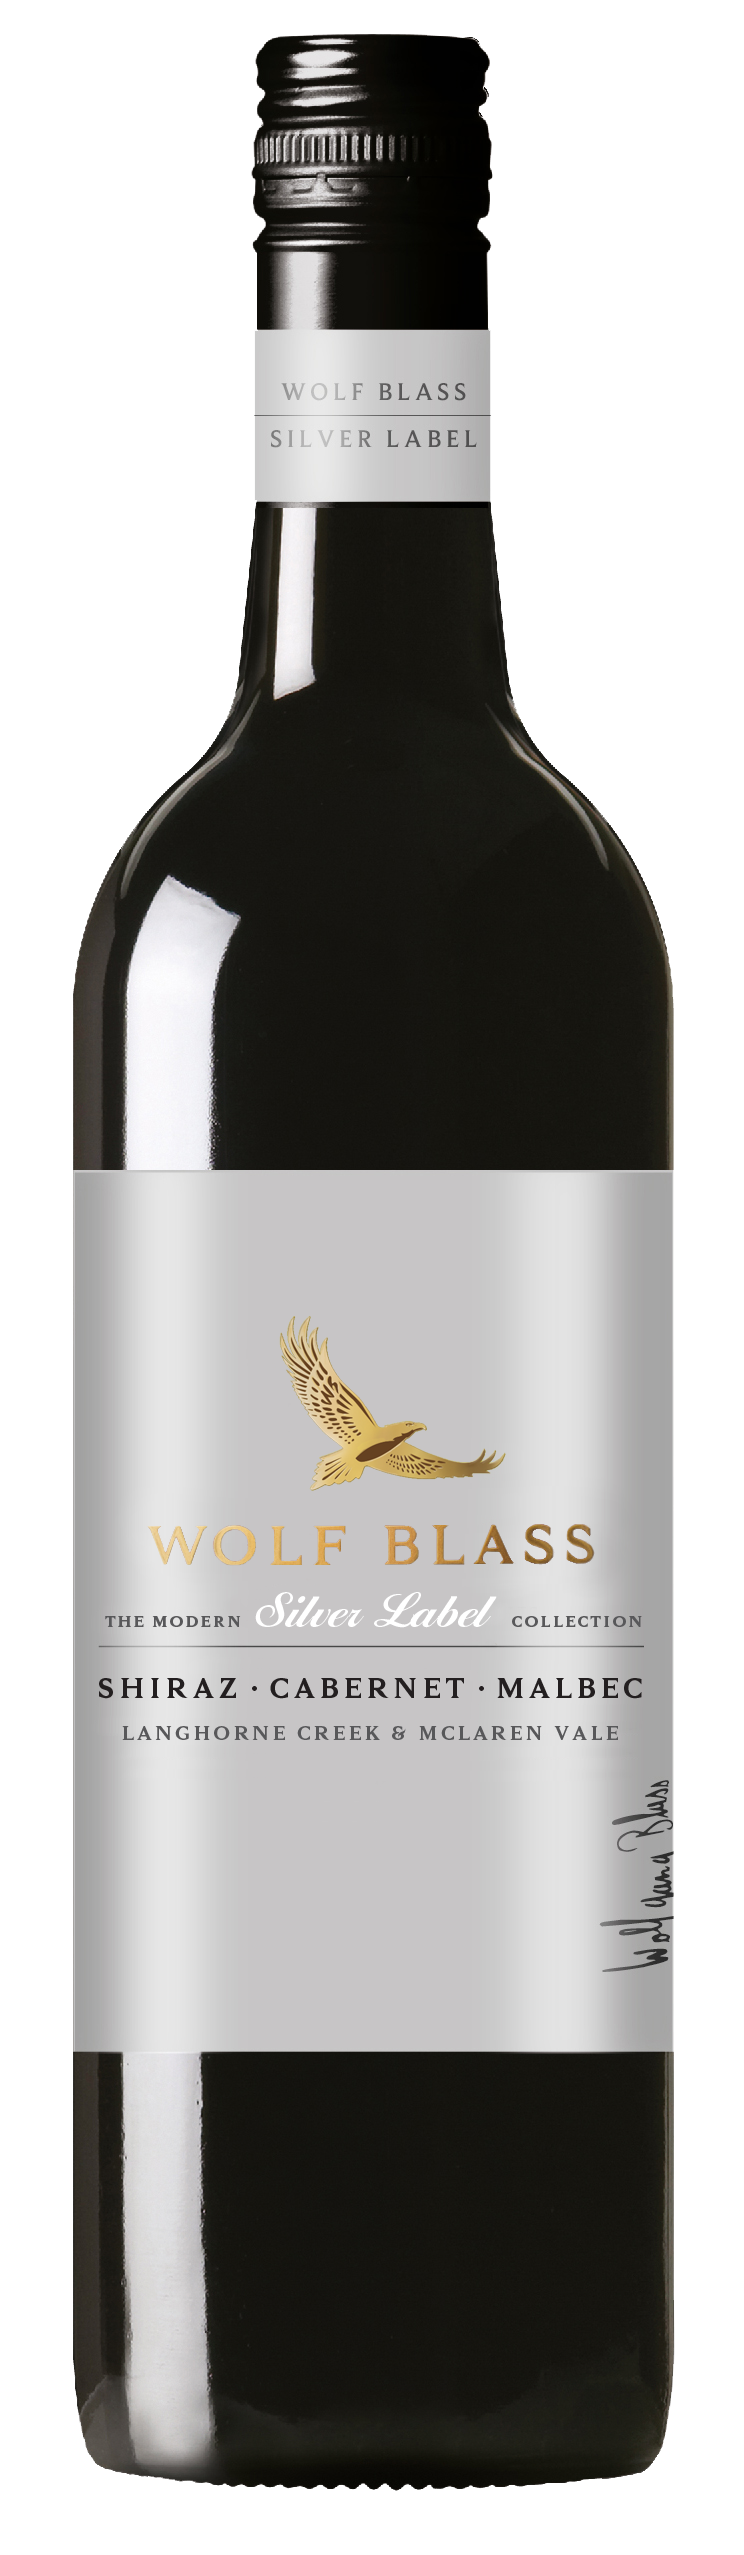 Wolf Blass Silver Label Shiraz Cabernet Malbec